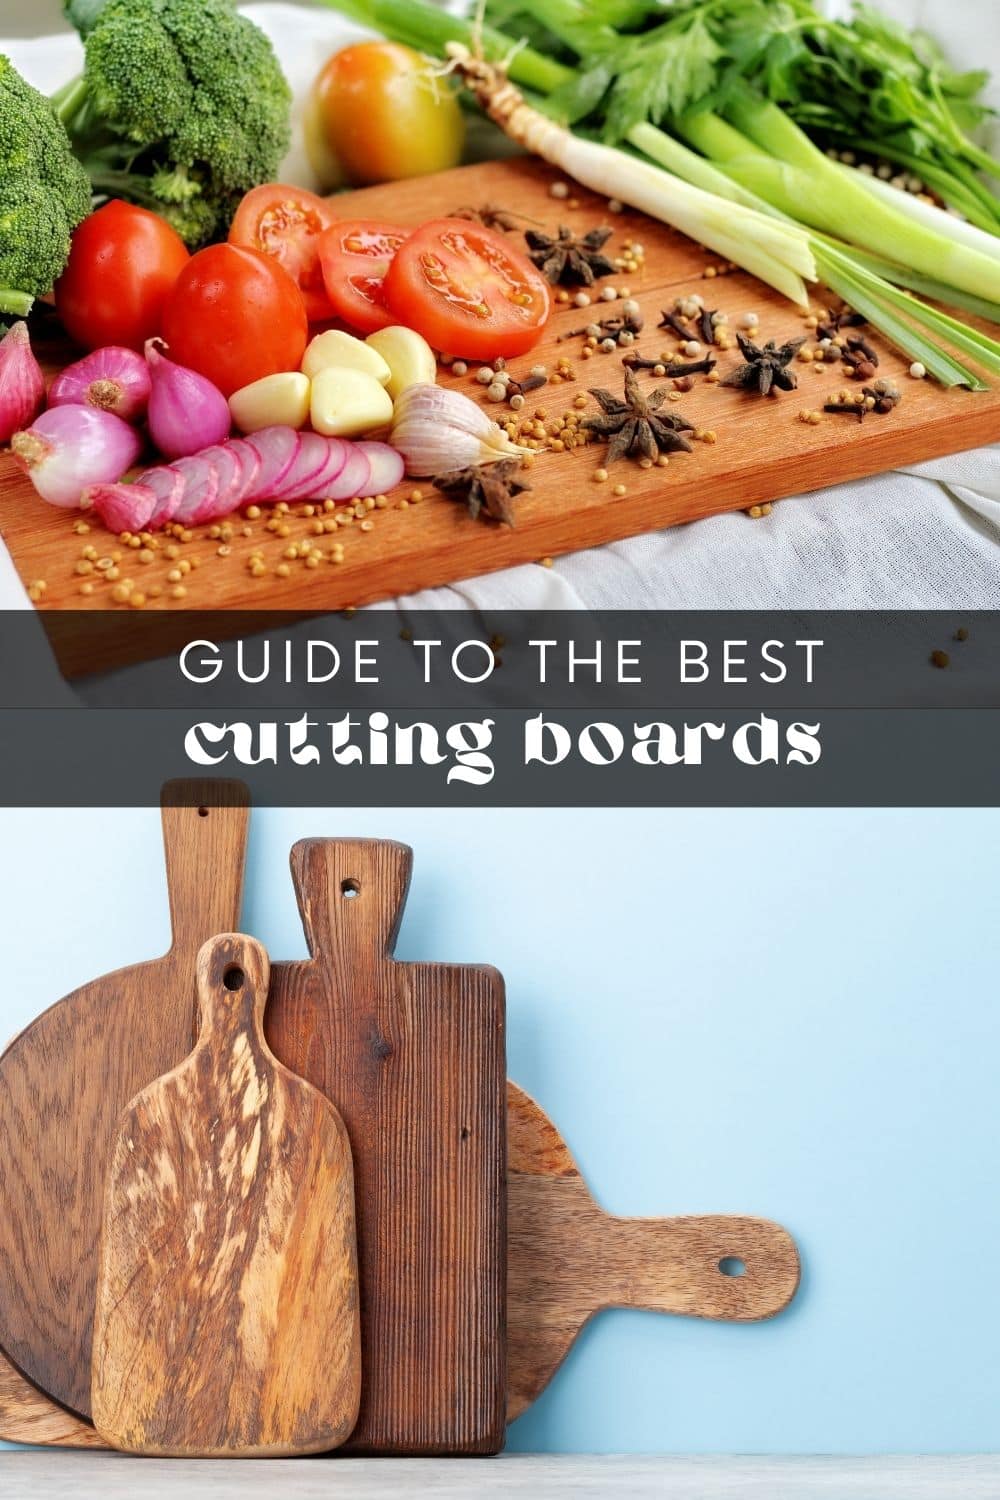 Best Dishwasher-Safe Cutting Boards